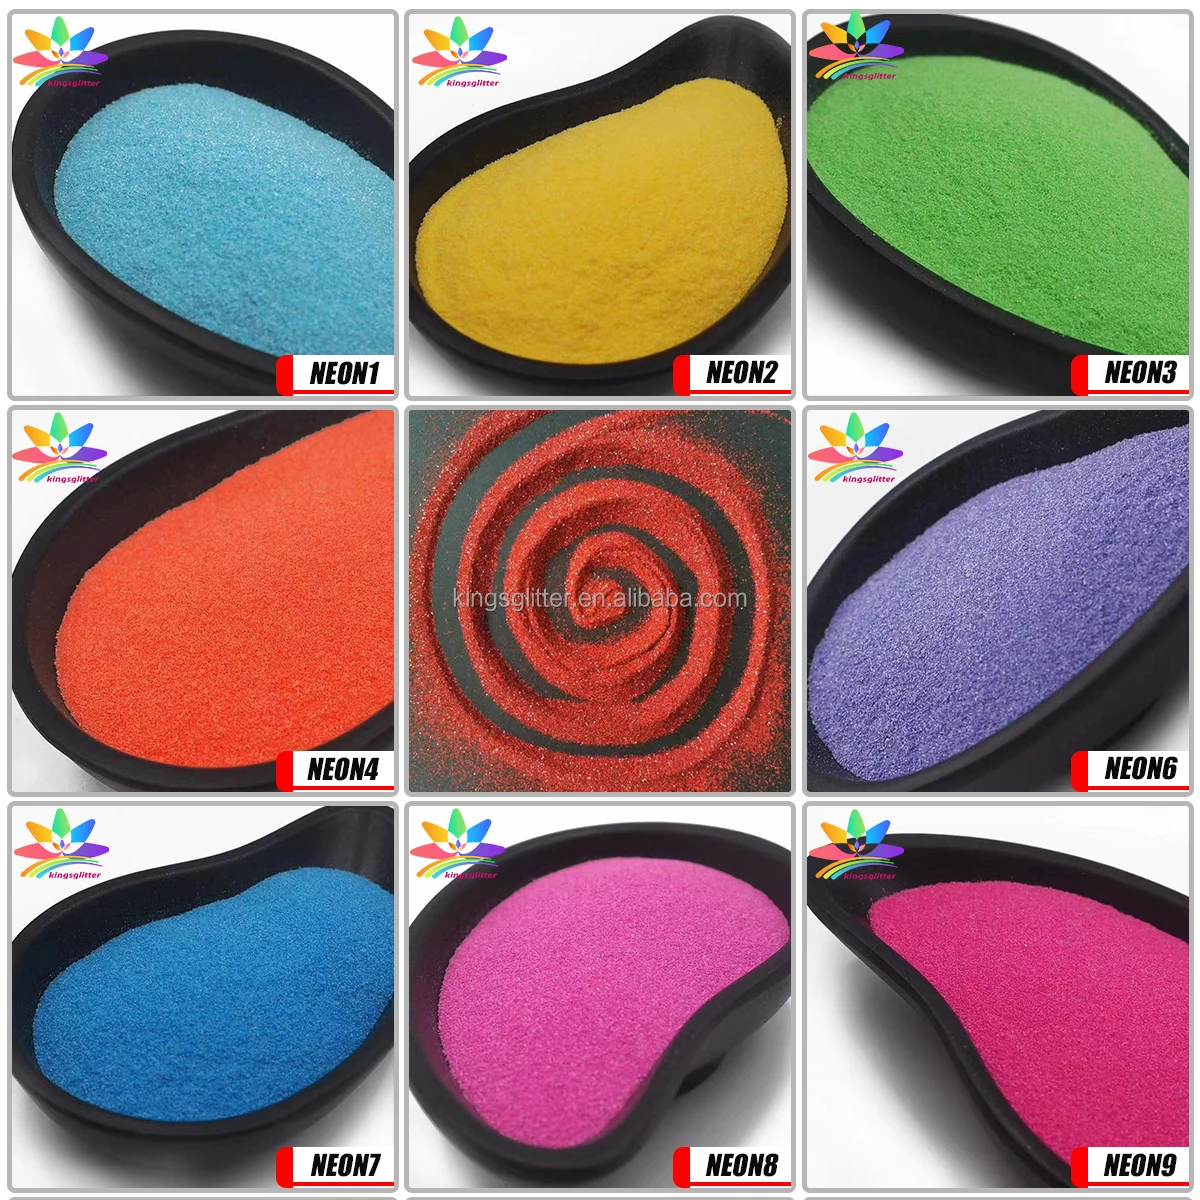 Hot sale 2OZ chunky biodegradable fine glitter for nail art craft glitter powder Hc87a72bfbca8495e81c79bfe1ff82071S